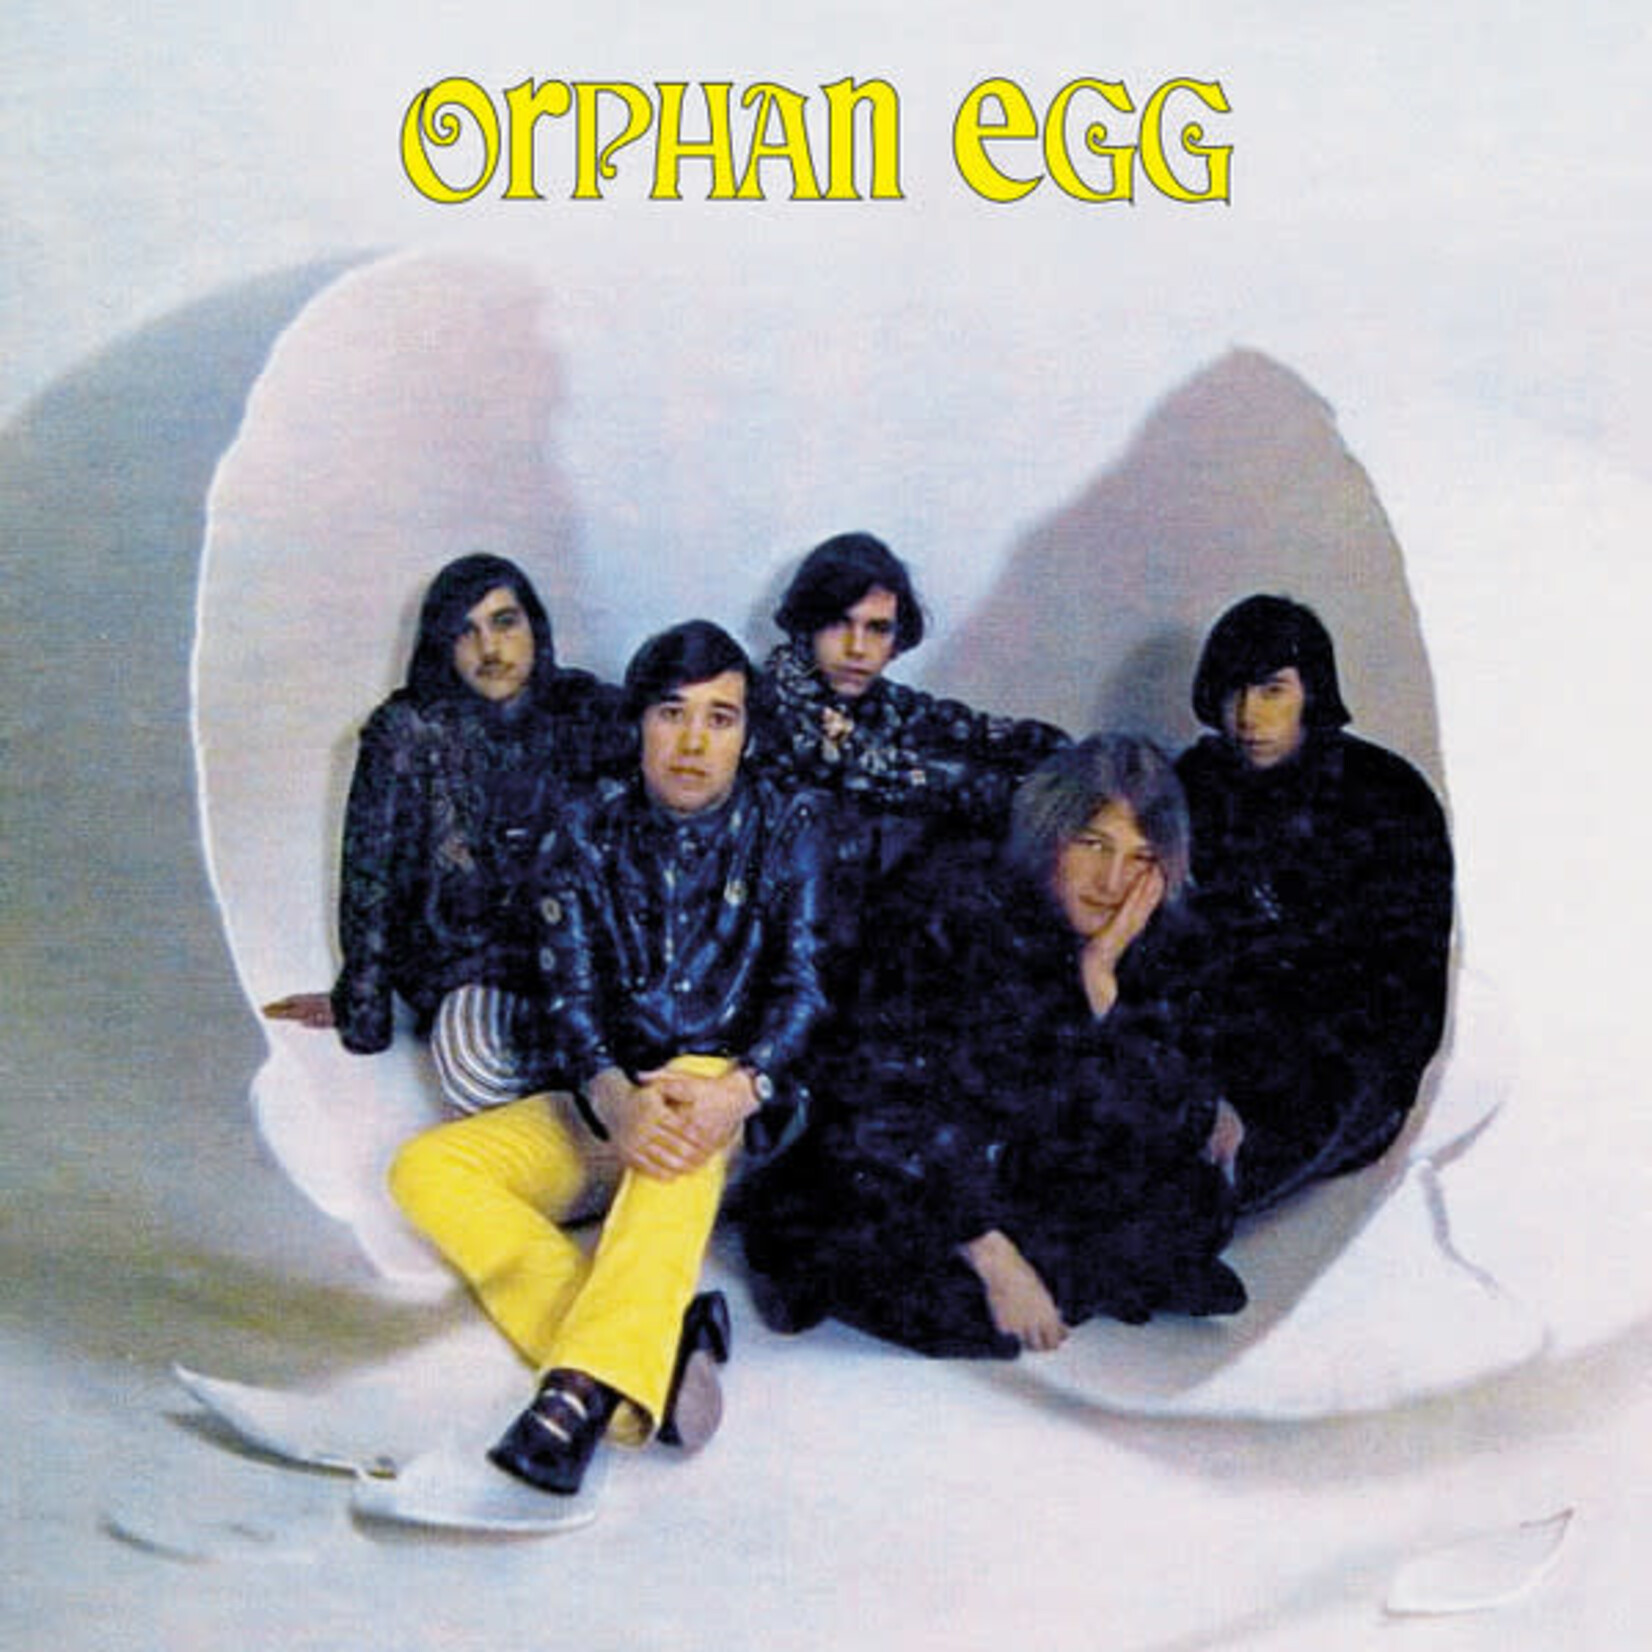 [New] Orphan Egg - Orphan Egg